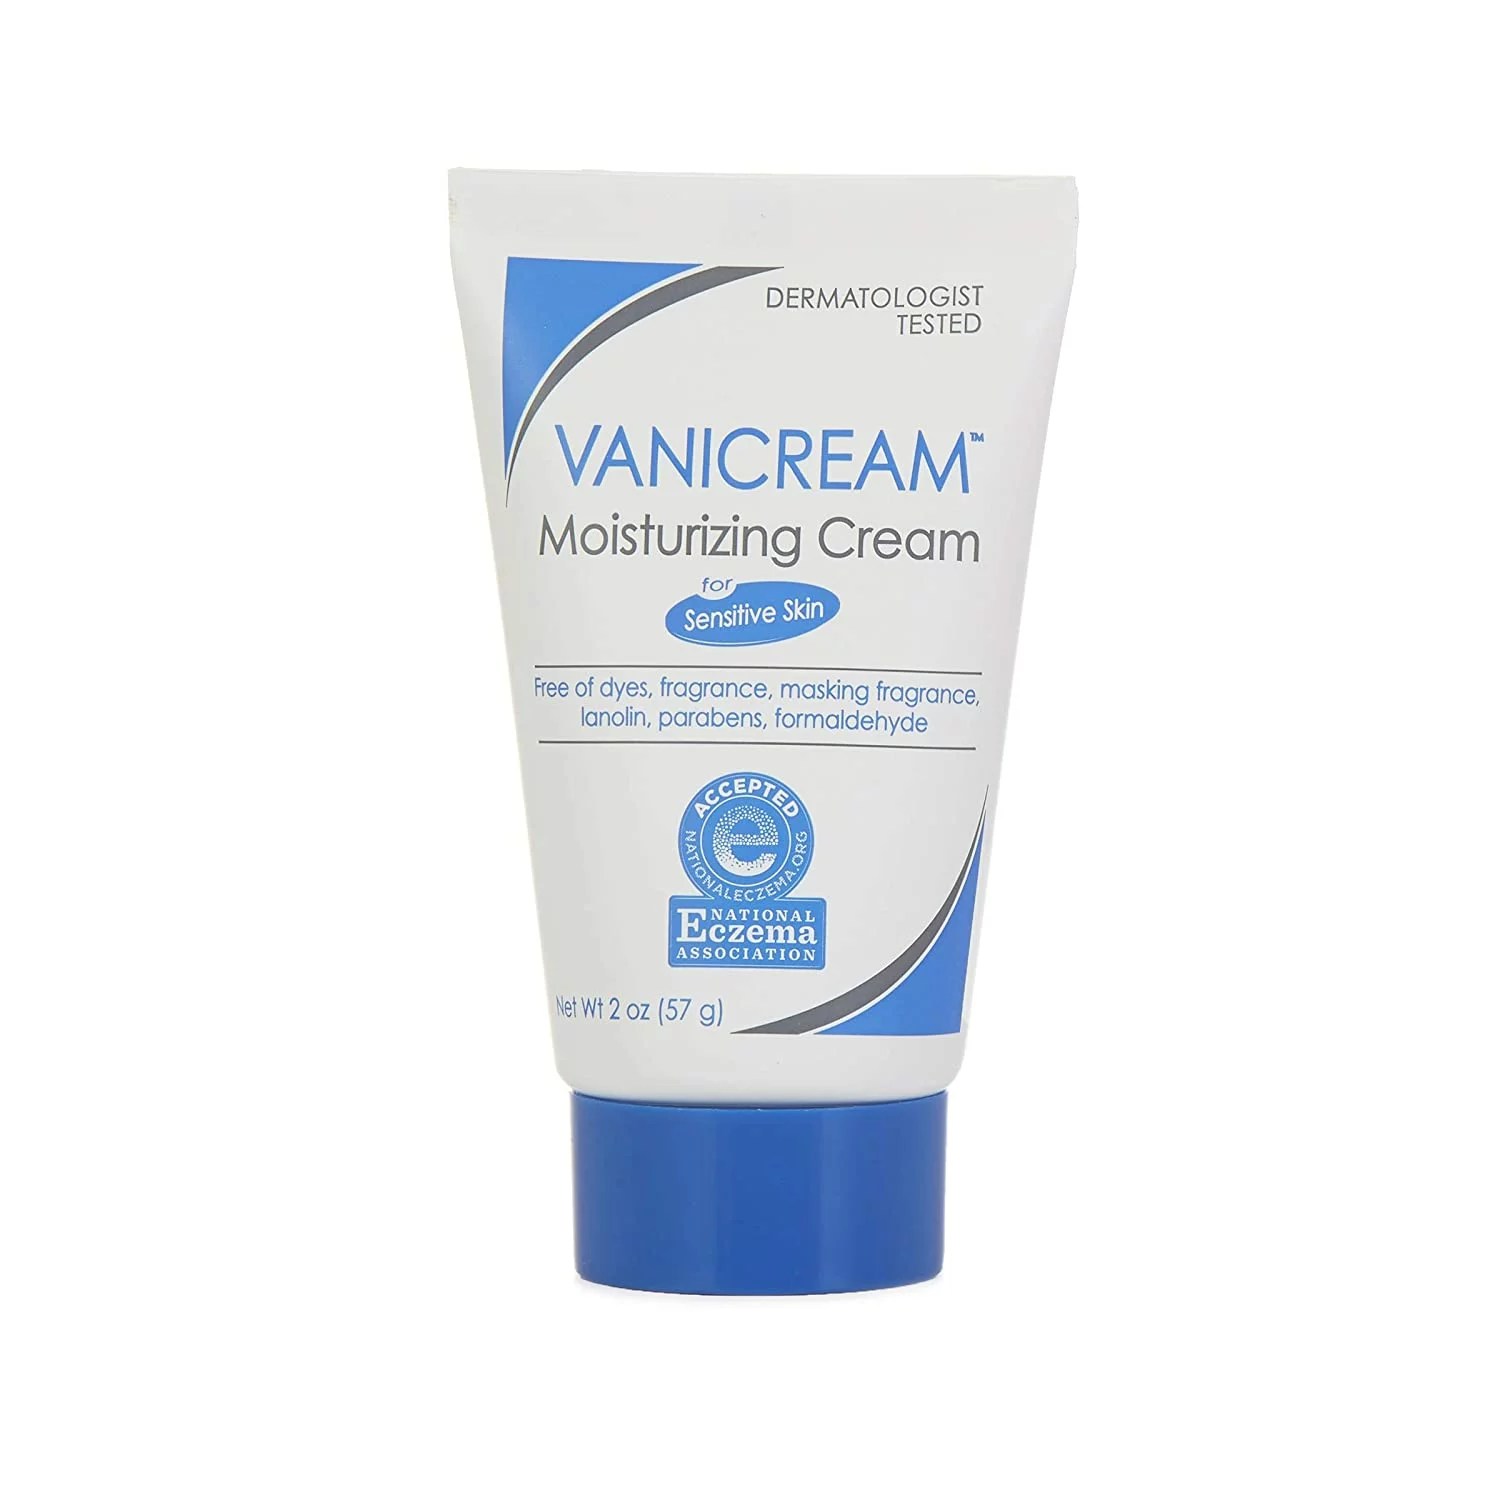 A bottle of vanicream moisturizing cream moisturizers for dry sensitive skin